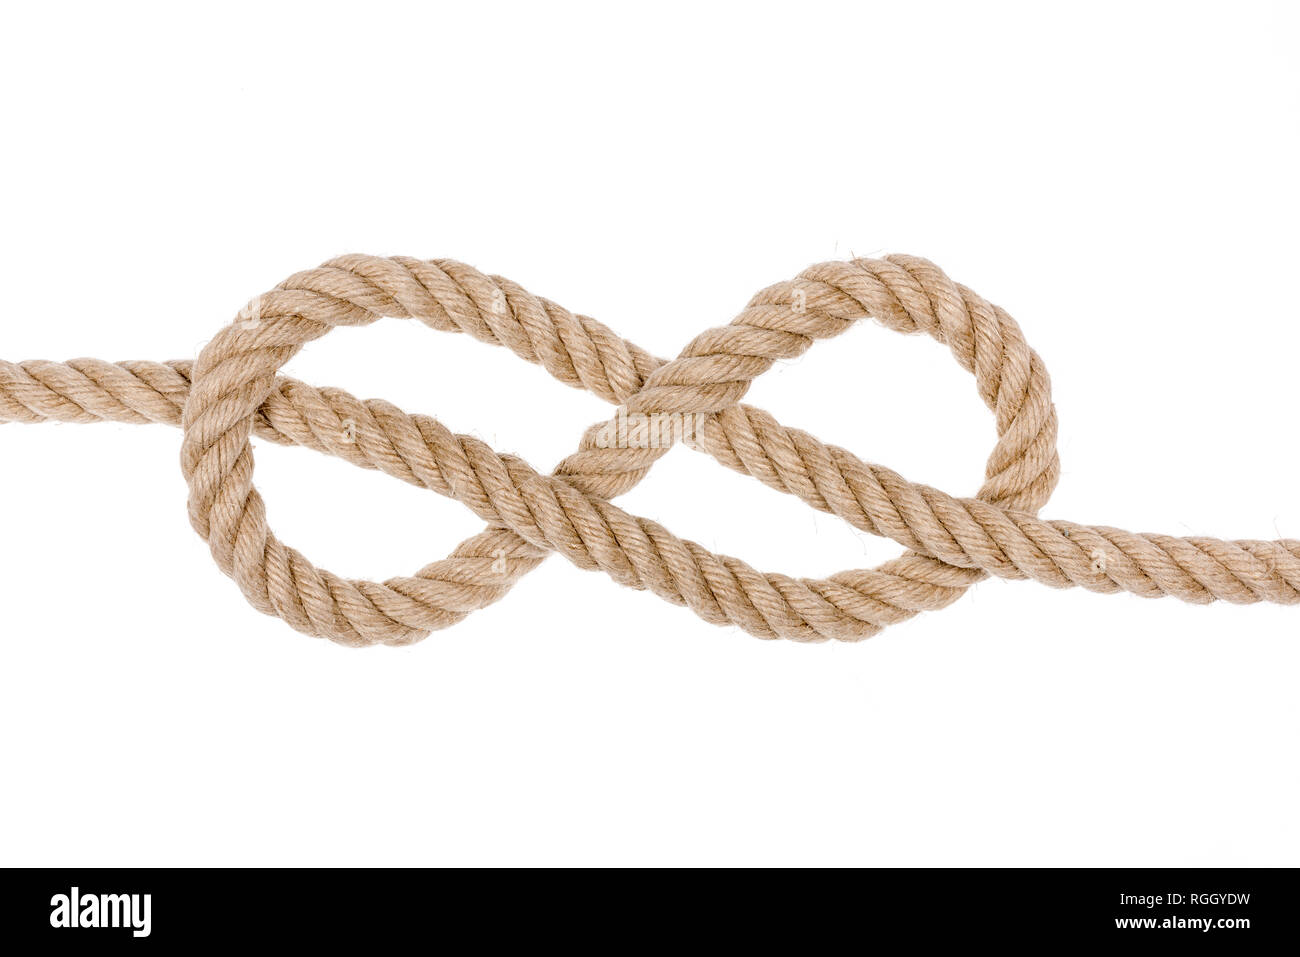 Nautical rope knot on white background. Stock Photo